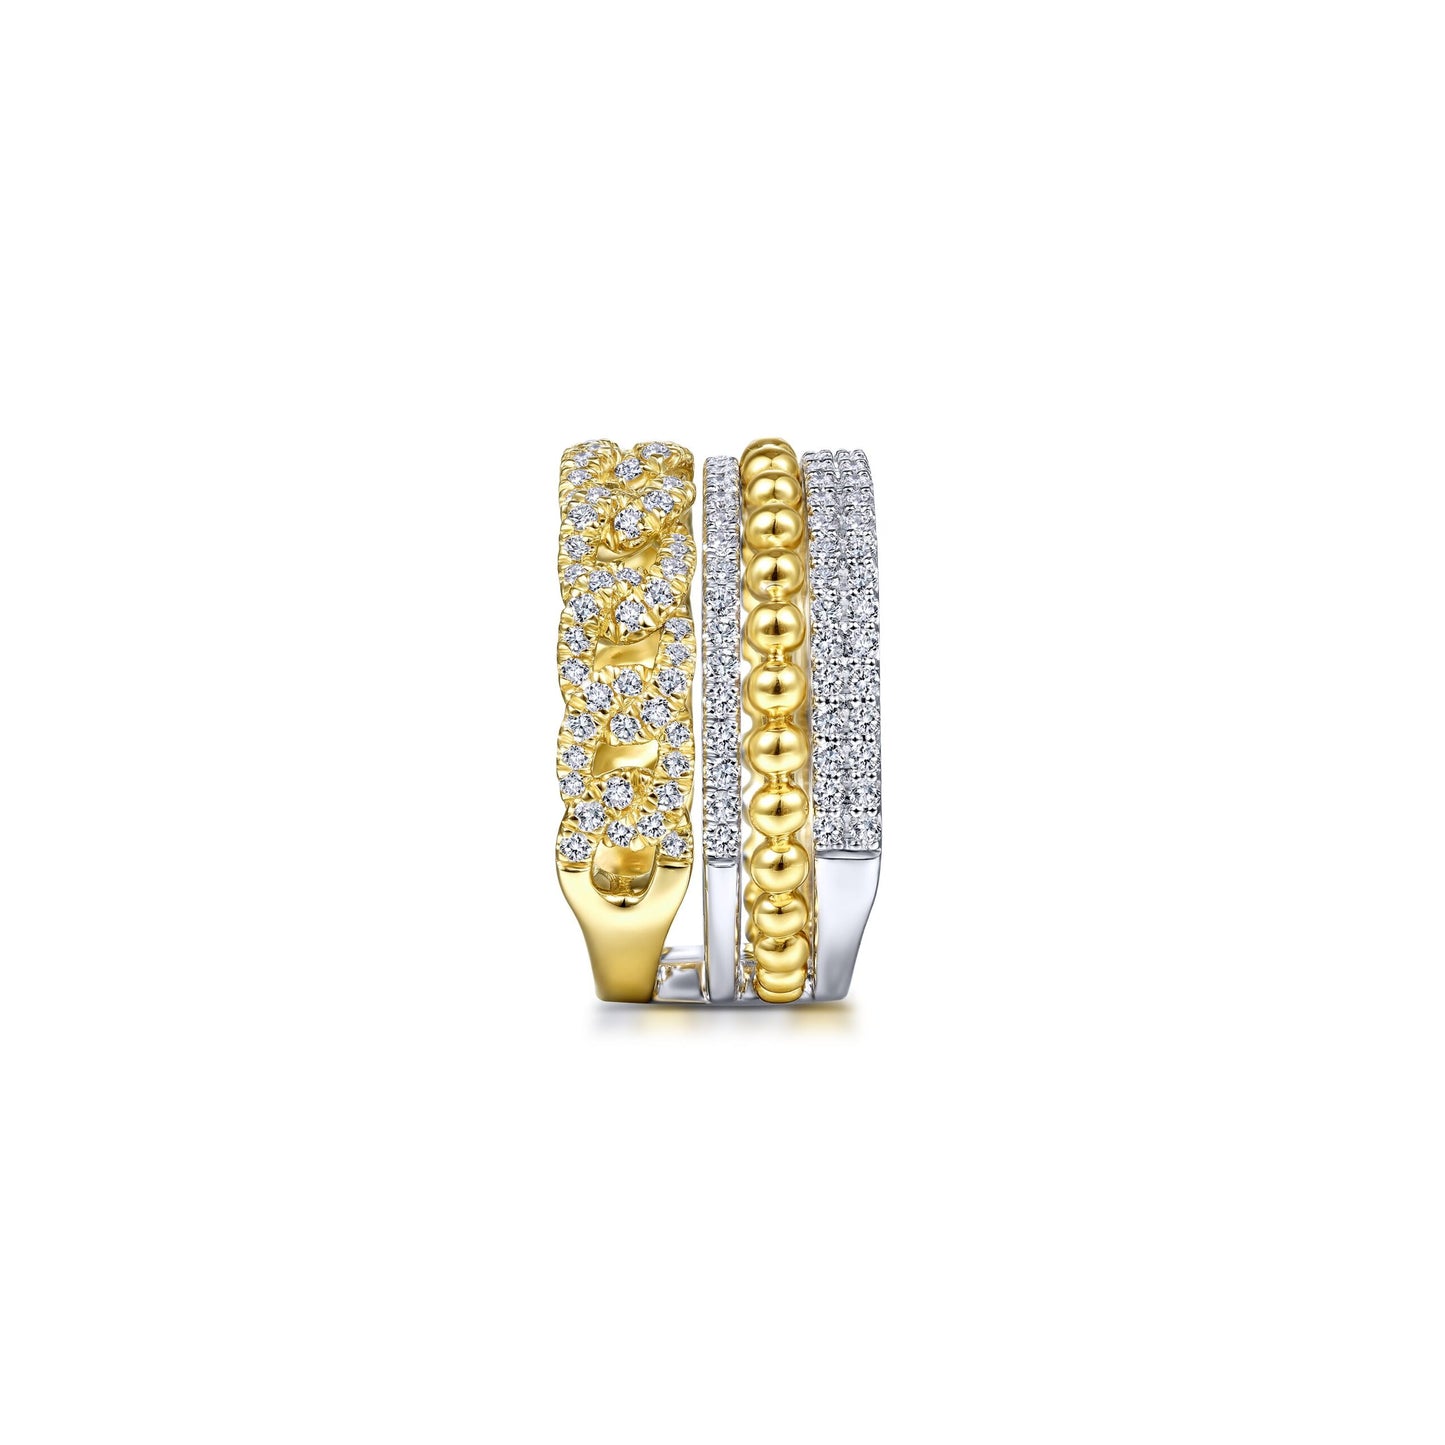 14K White-Yellow Gold Wide Band Layered Diamond Ring